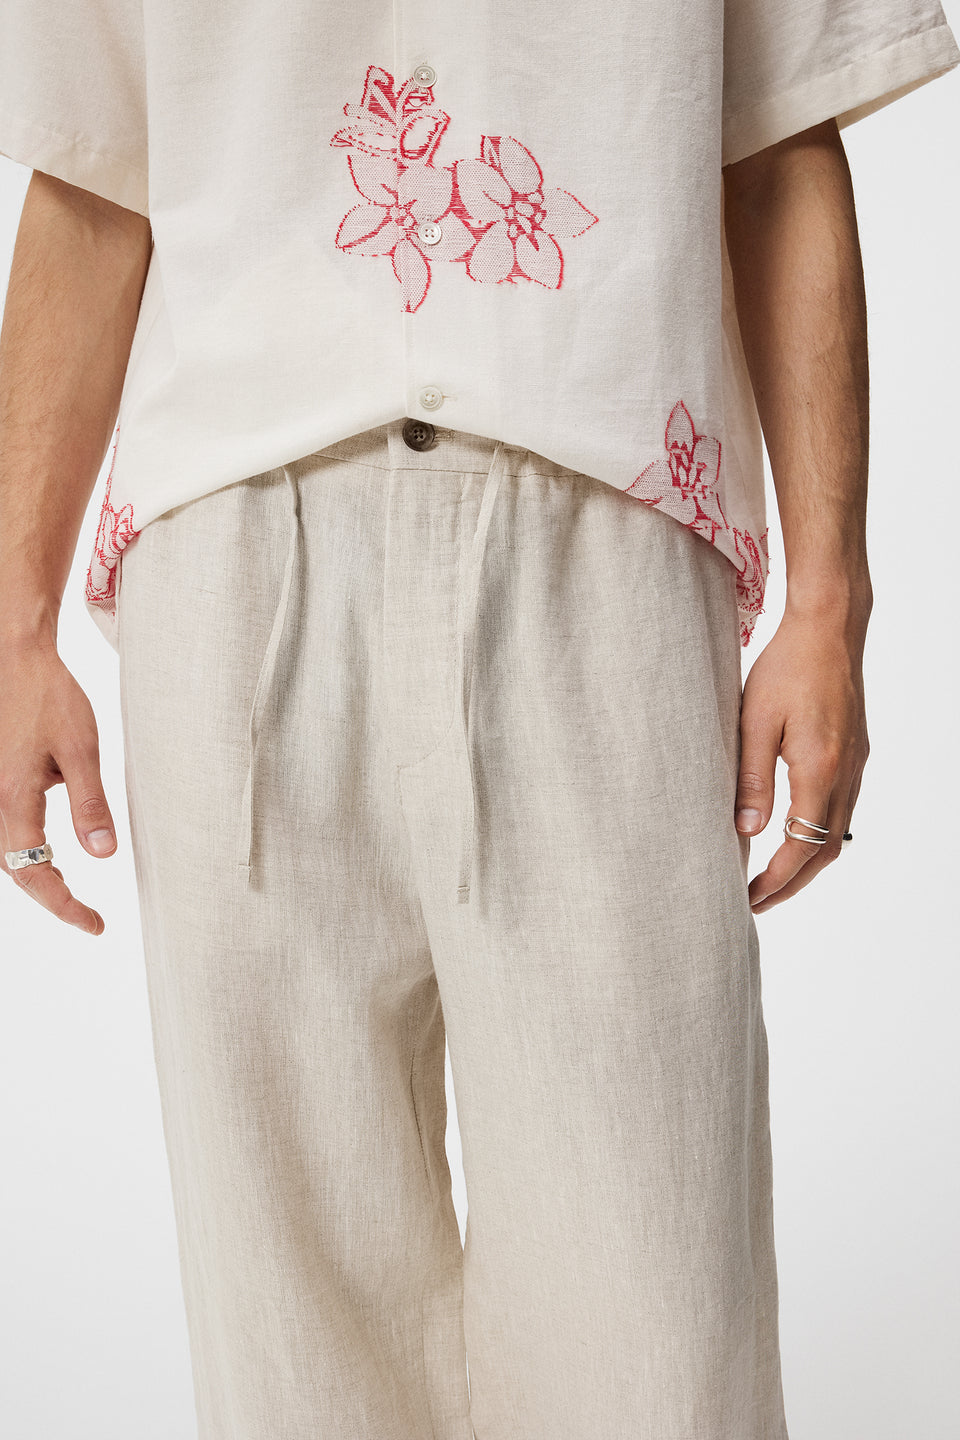 Noah Wide Linen Pants / Safari Beige